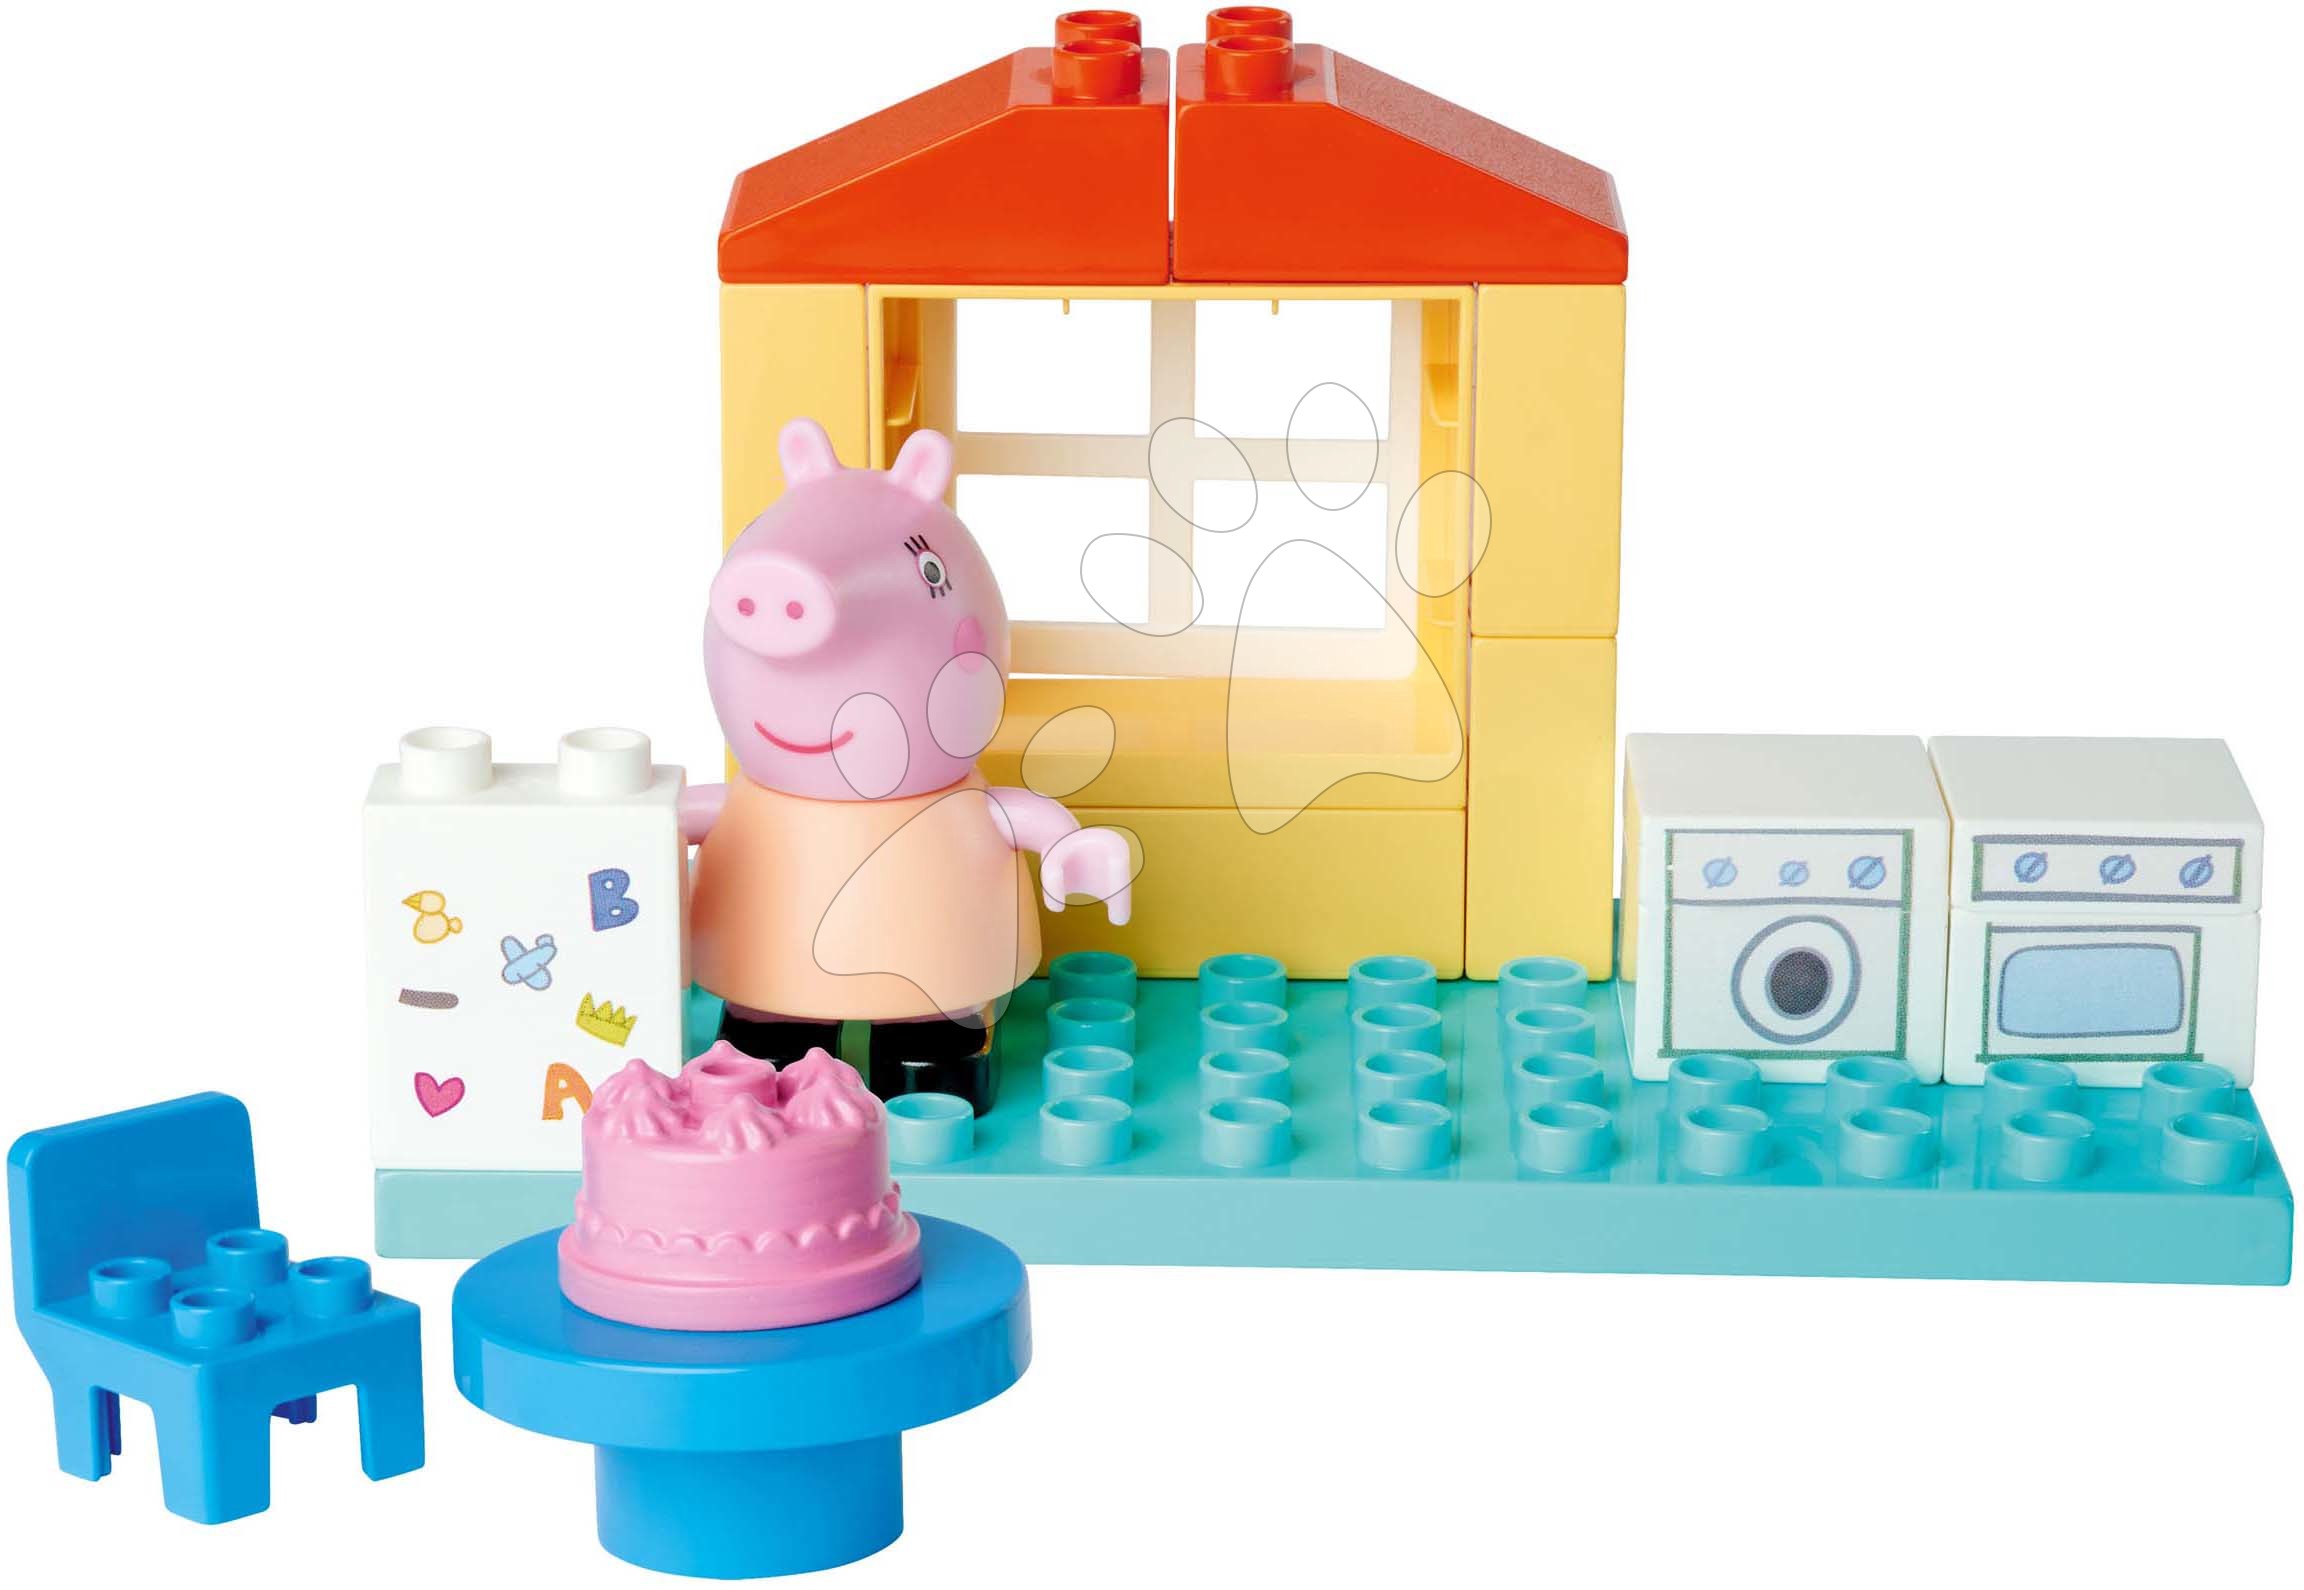 Stavebnica Peppa Pig Basic Set PlayBig Bloxx BIG s figúrkou v kuchyni od 18 mes